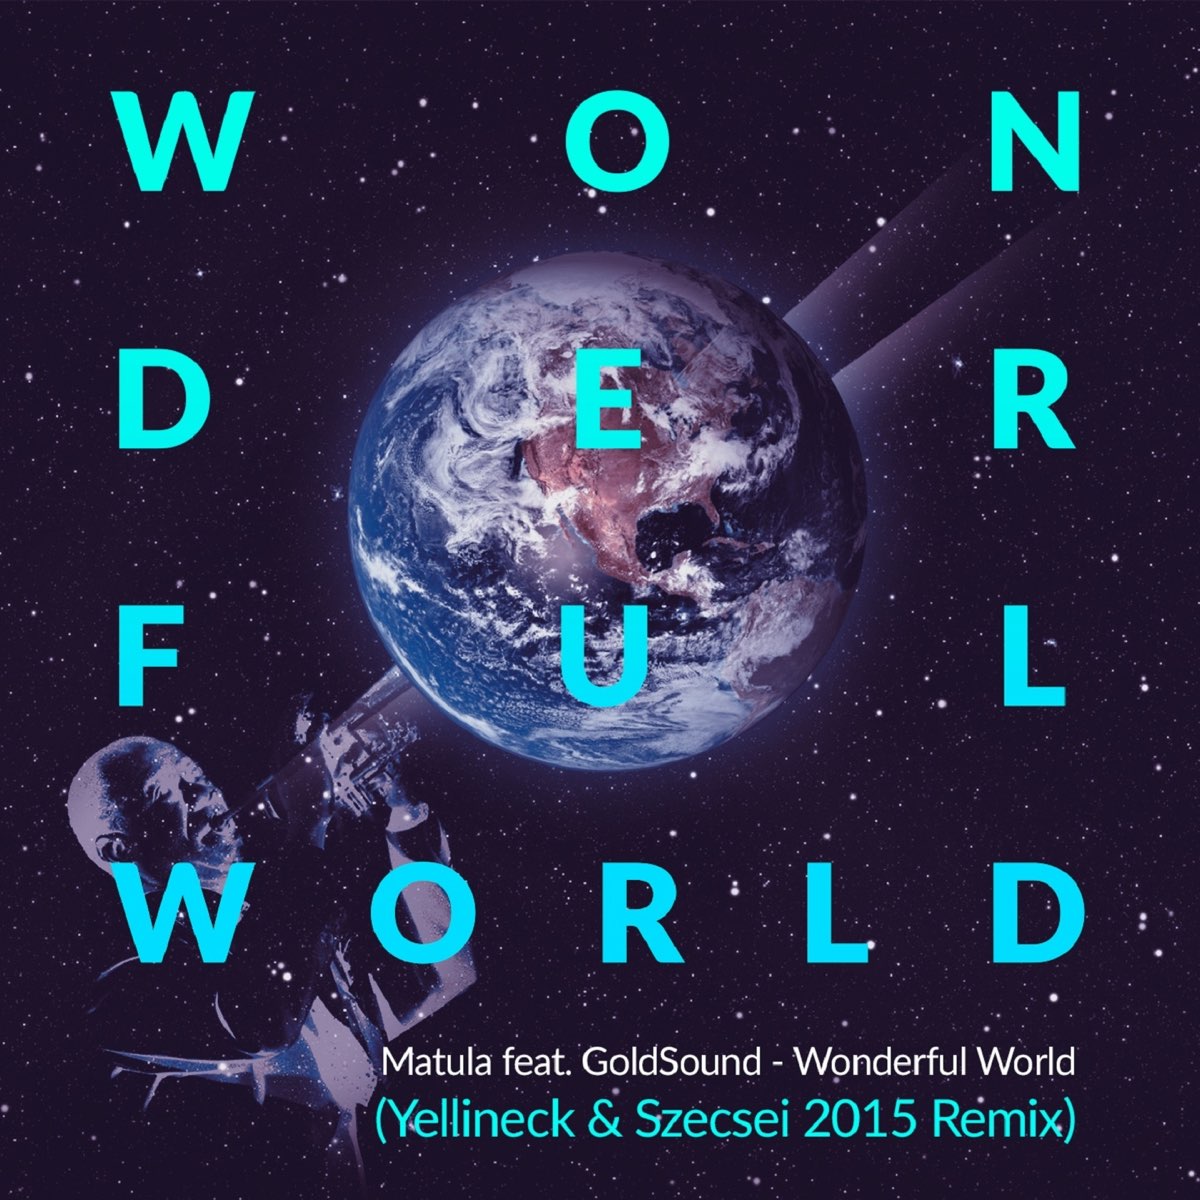 Wonderful World. Wonderful World (the distance & IGI Remix) Matula feat. Goldsound. Believe in me feat. Goldsound [Extended Mix]. Our wonderful world